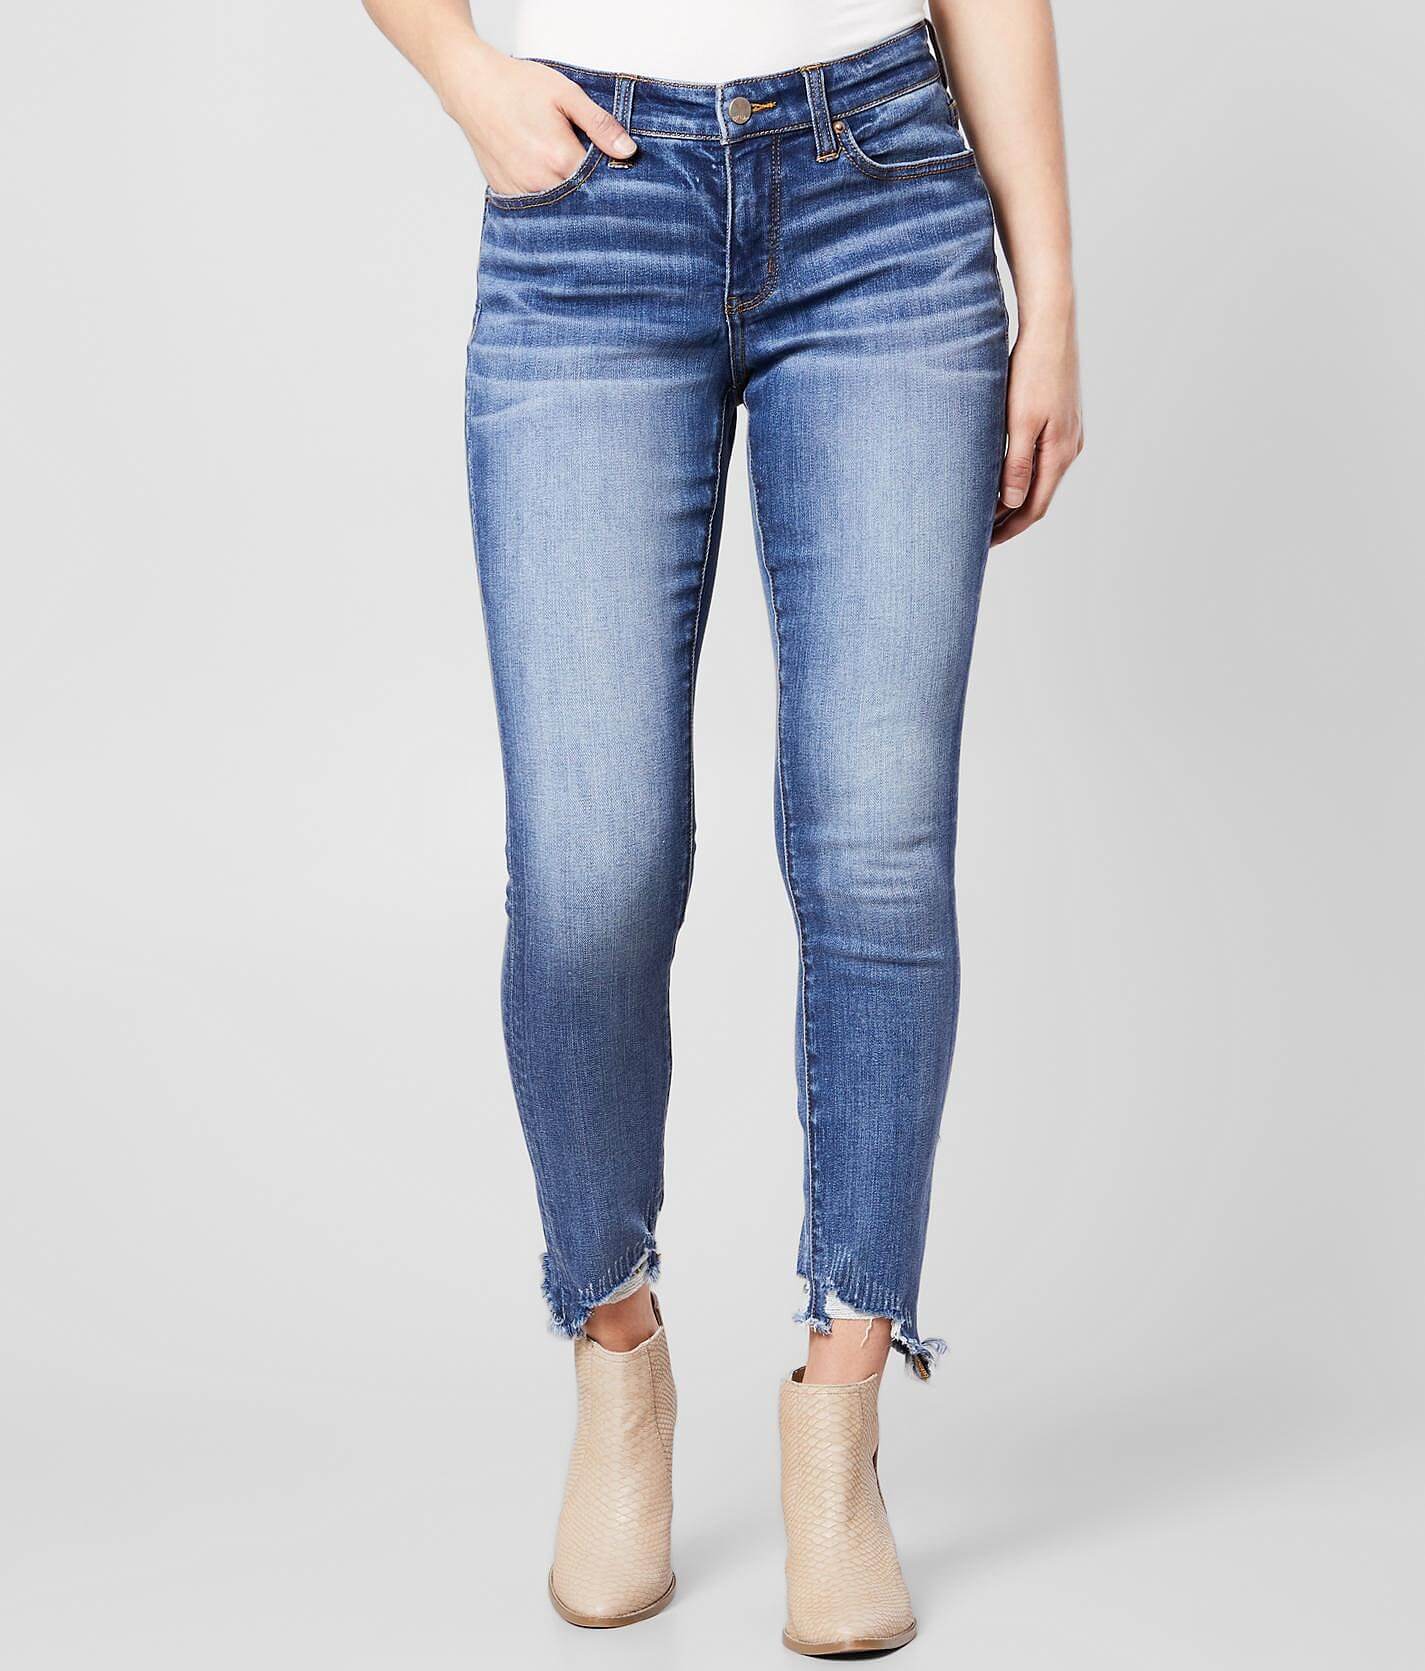 female jeans on jumia